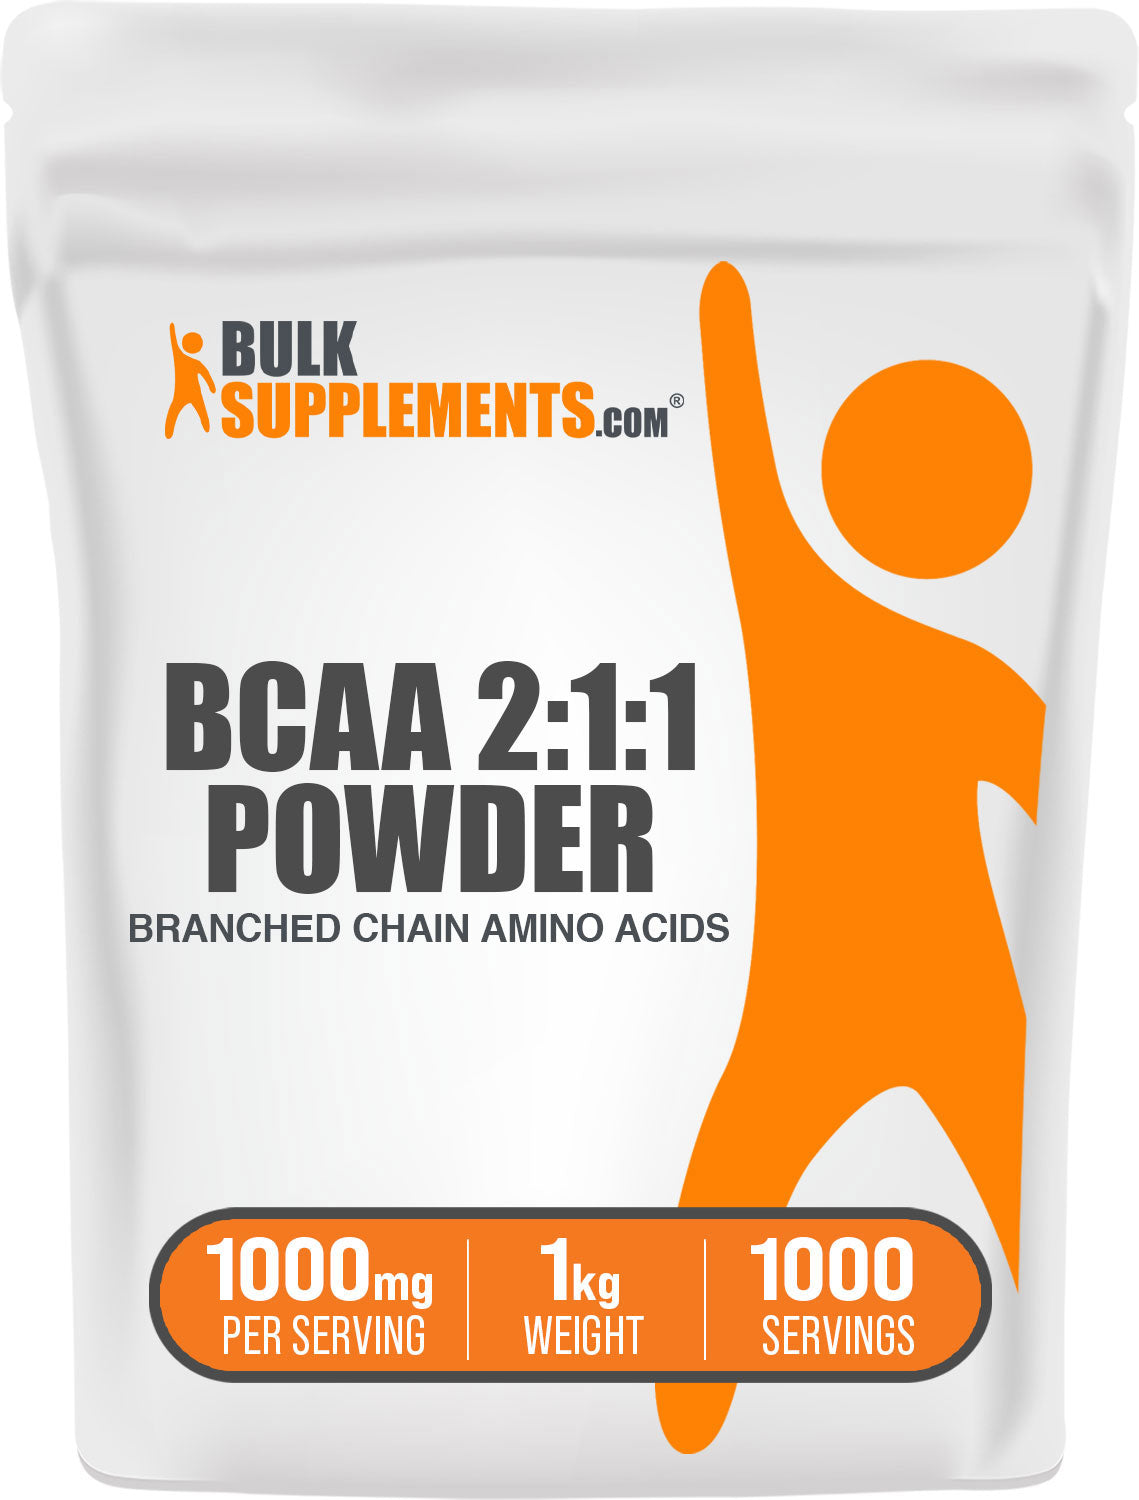 BCAA 2:1:1 Powder 1kg bag